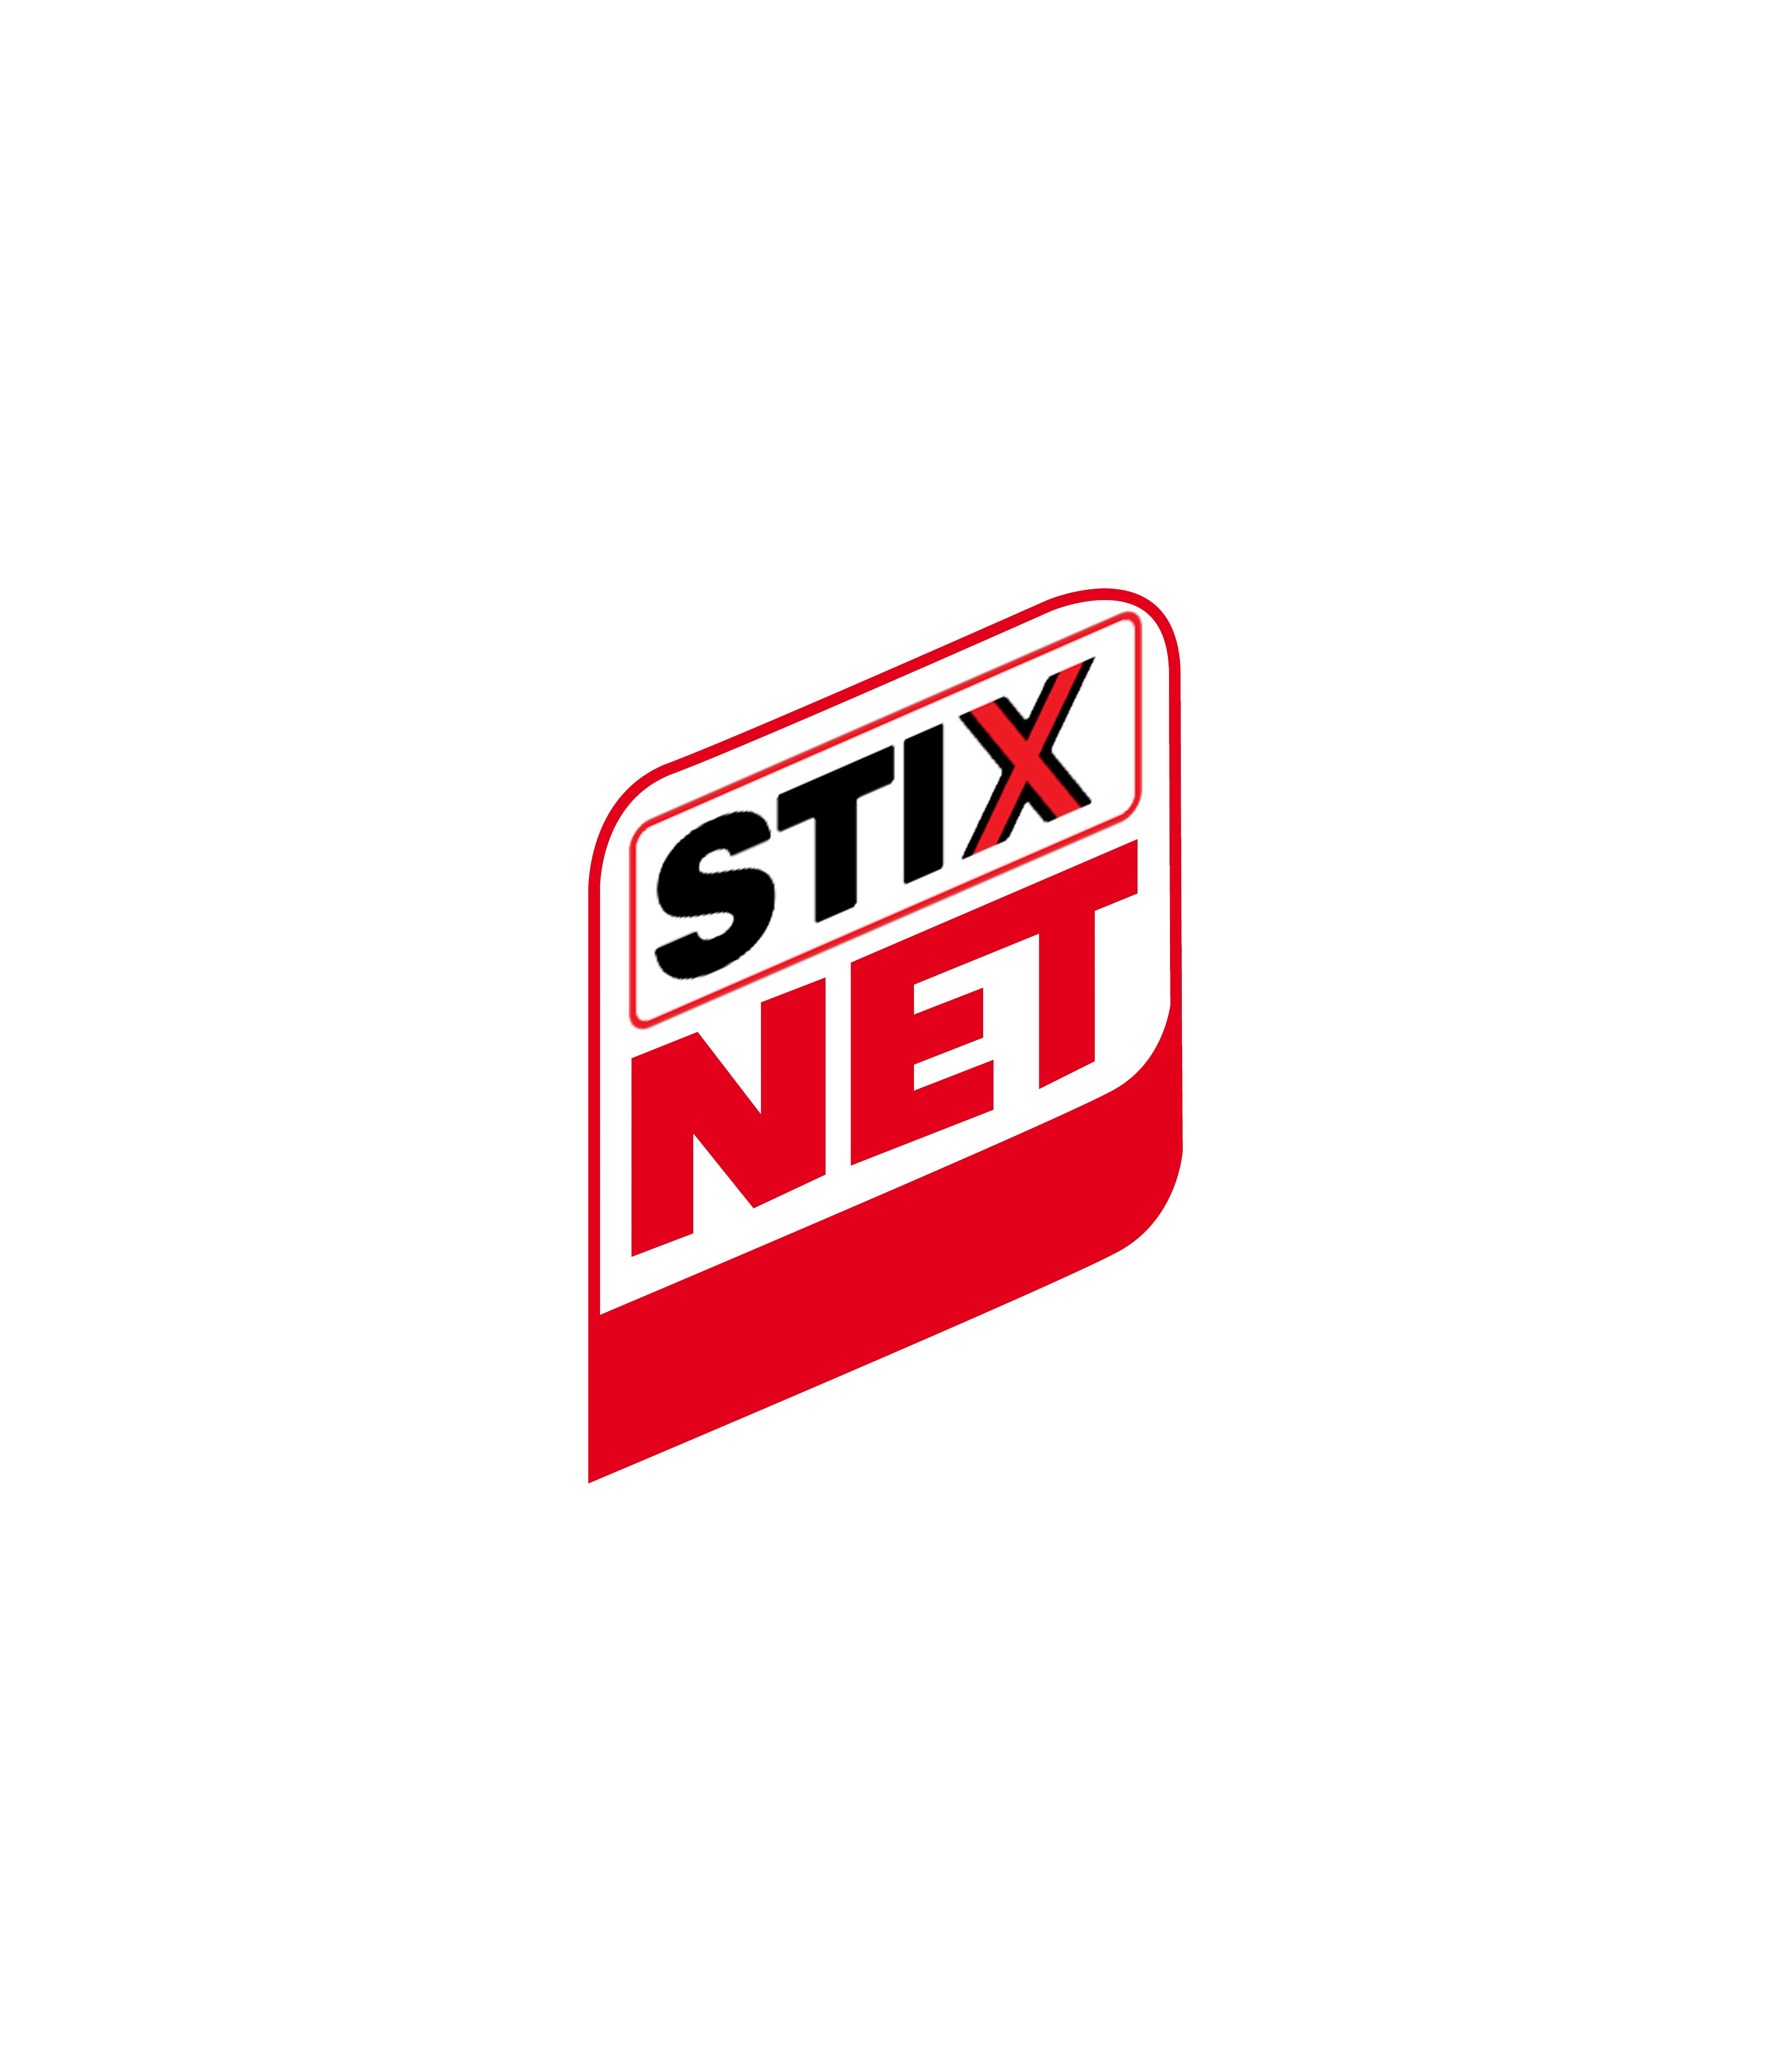 STIXnet